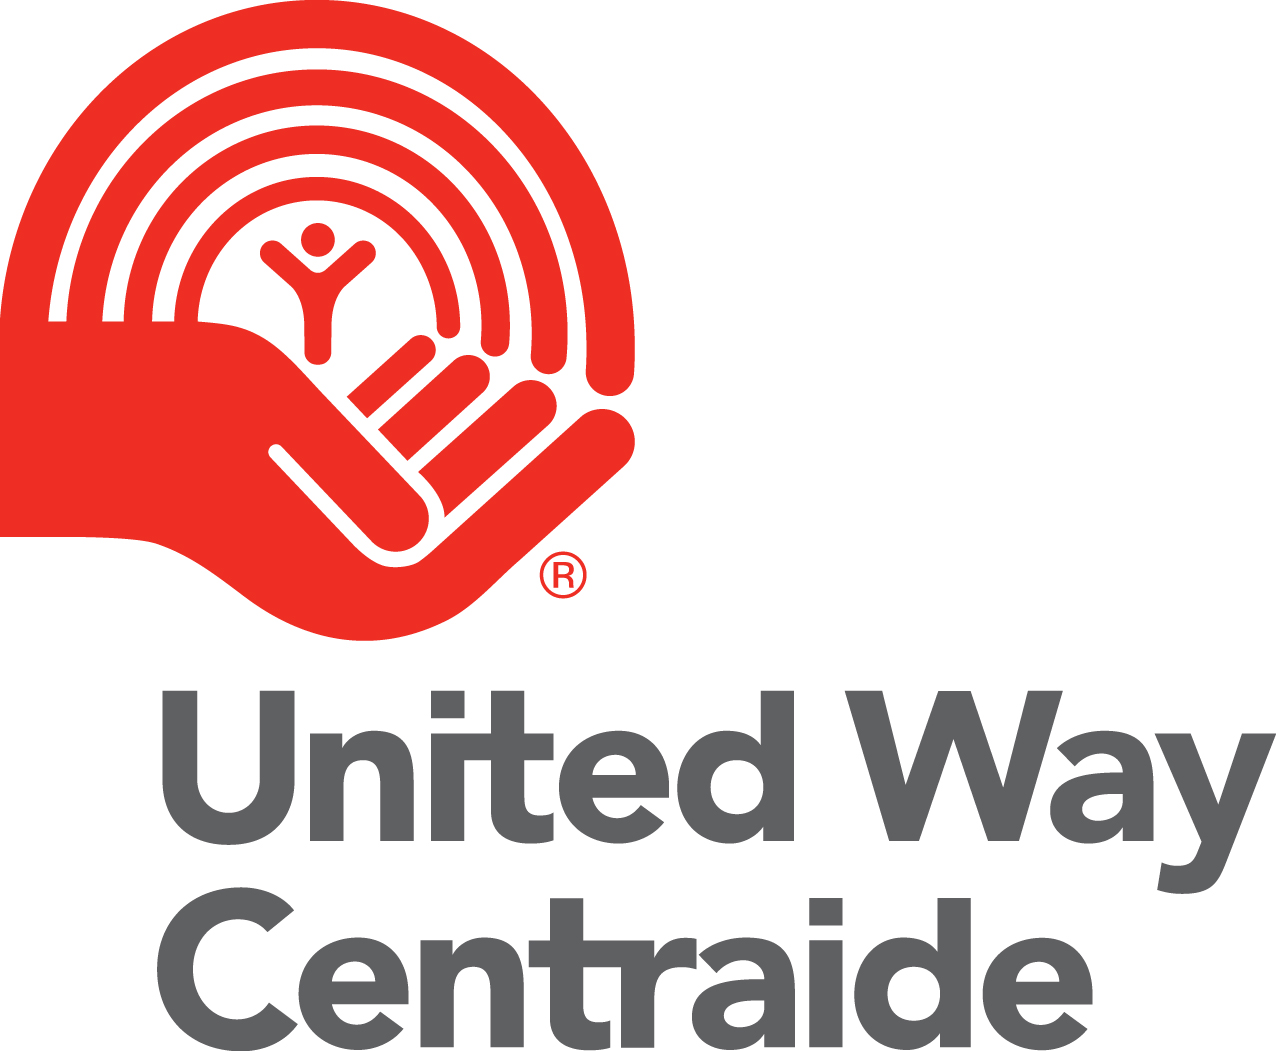 Centraide – United Way